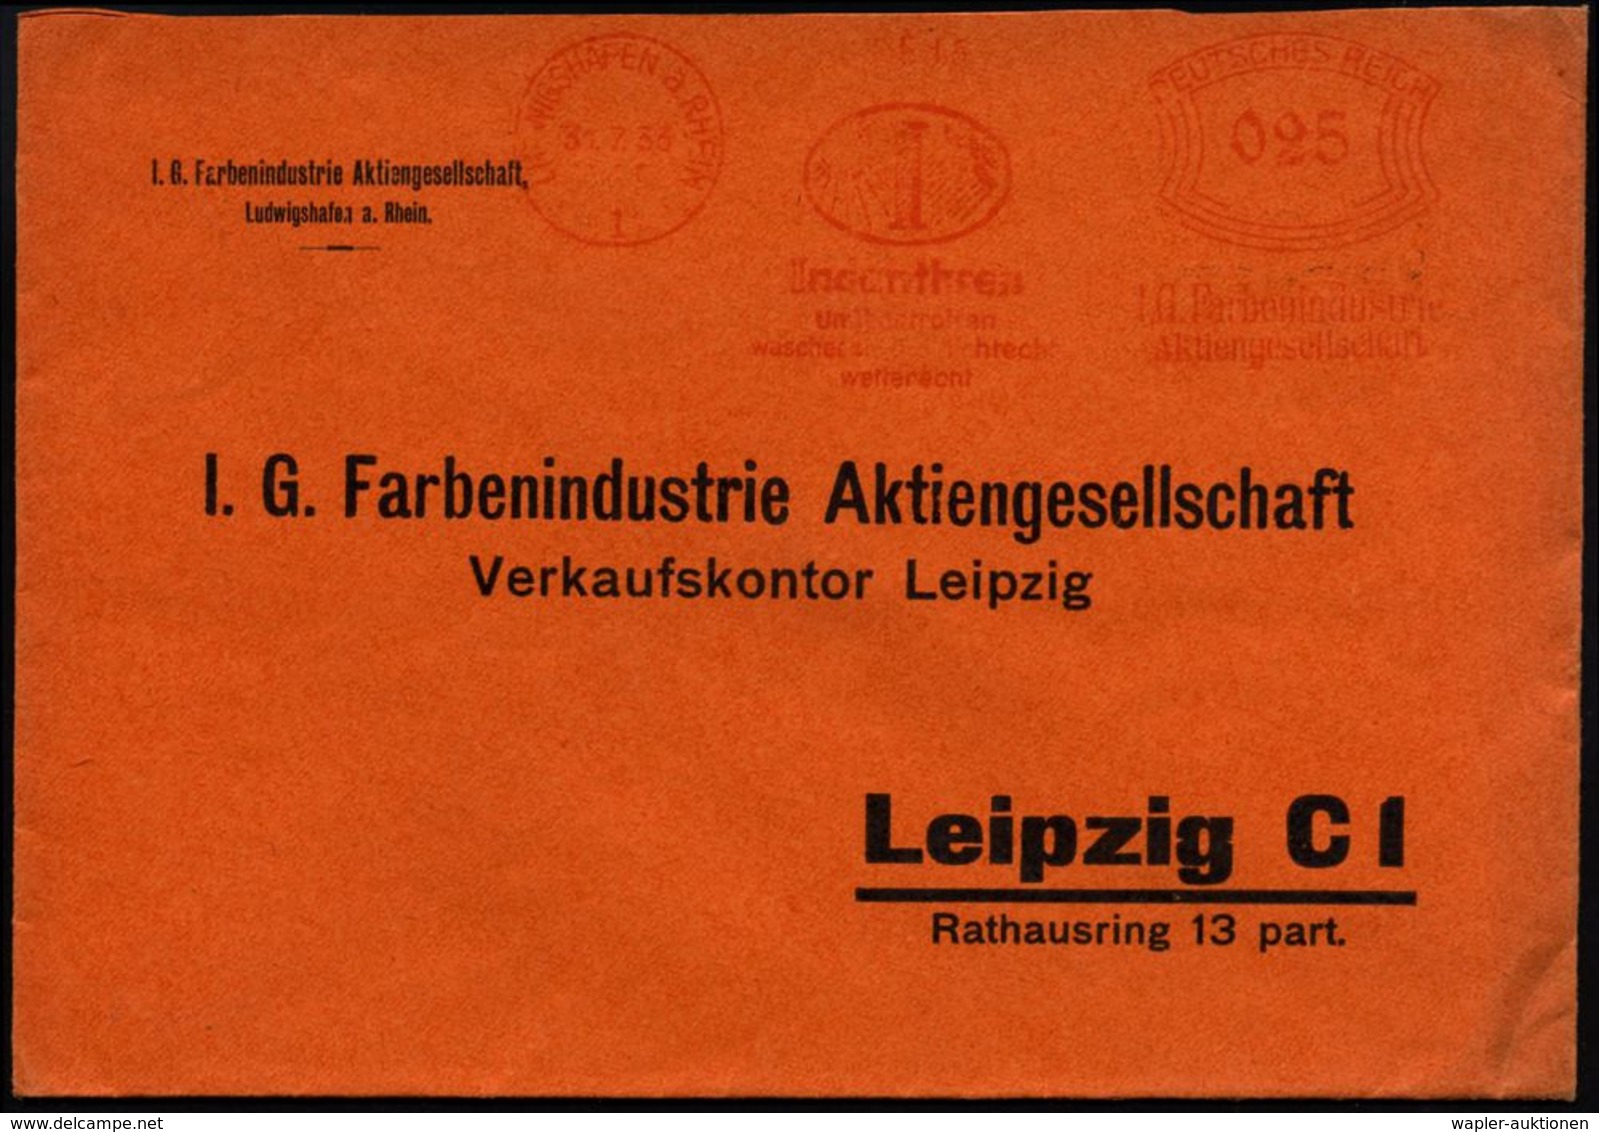 LUDWIGSHAFEN A.RHEIN/ 1/ Indanthren/ ..wetterecht/ I.G.Farbenindustrie/ AG 1933 (31.7.) AFS (Logo: Sonne/ Regenwolke) Or - Chimica